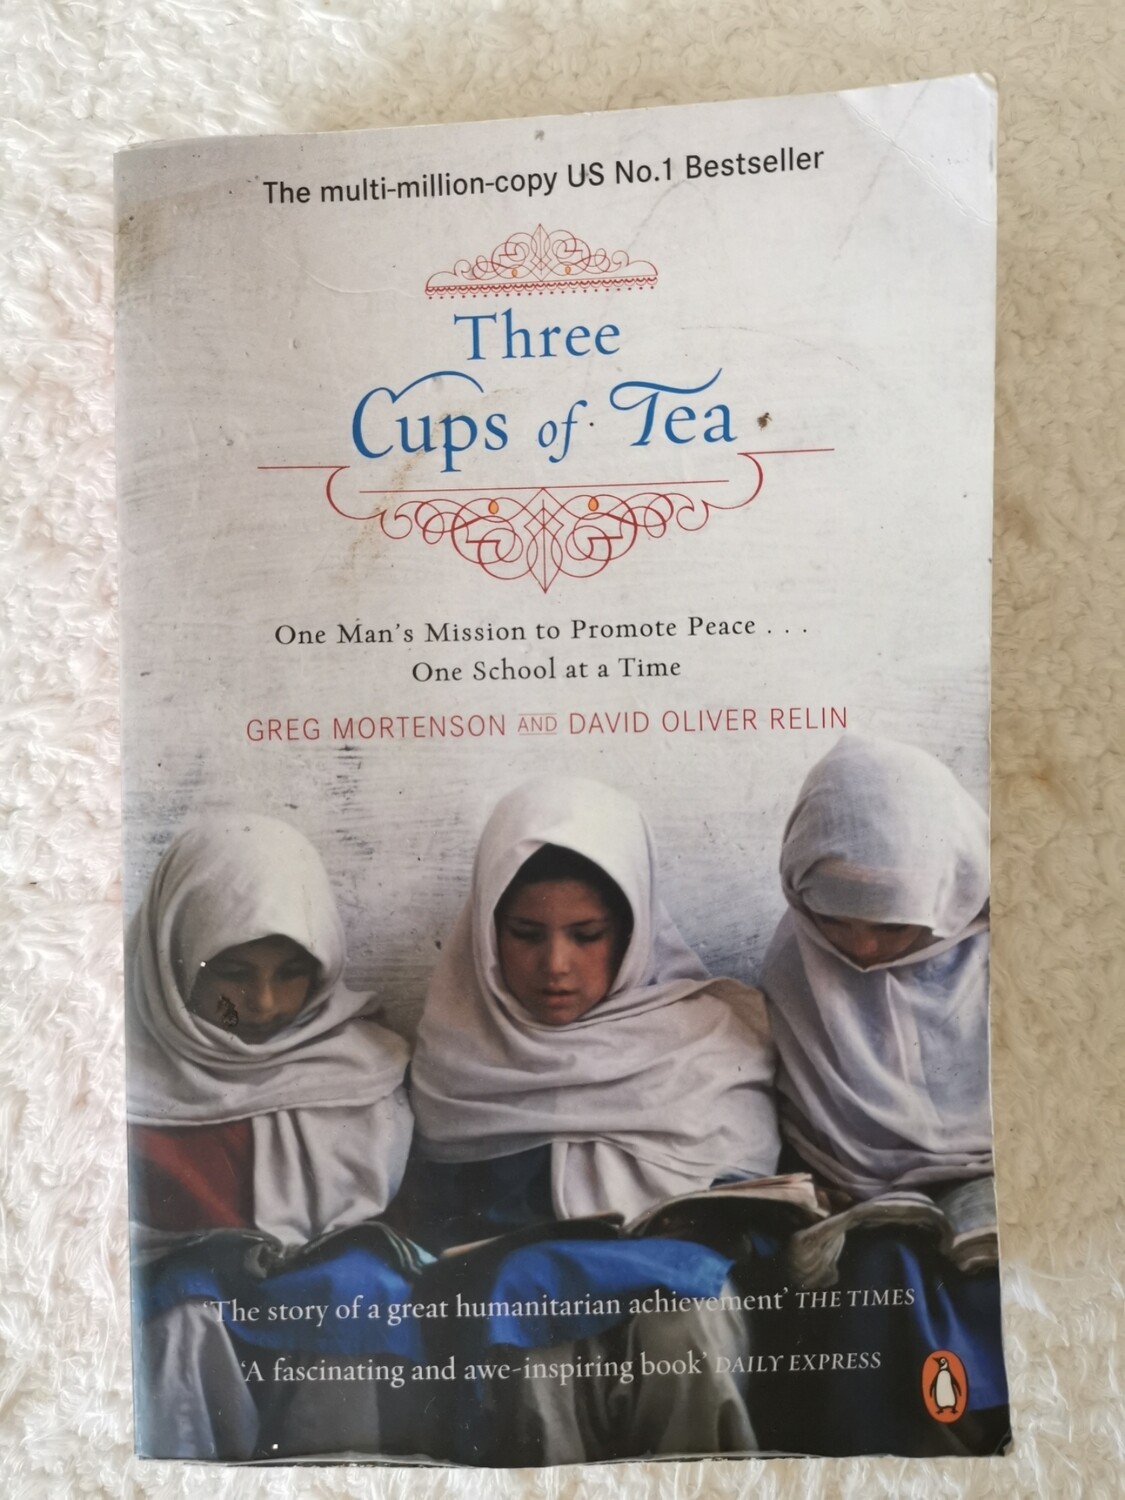 Three cups of tea, Greg Mortensen and David Oliver Relin